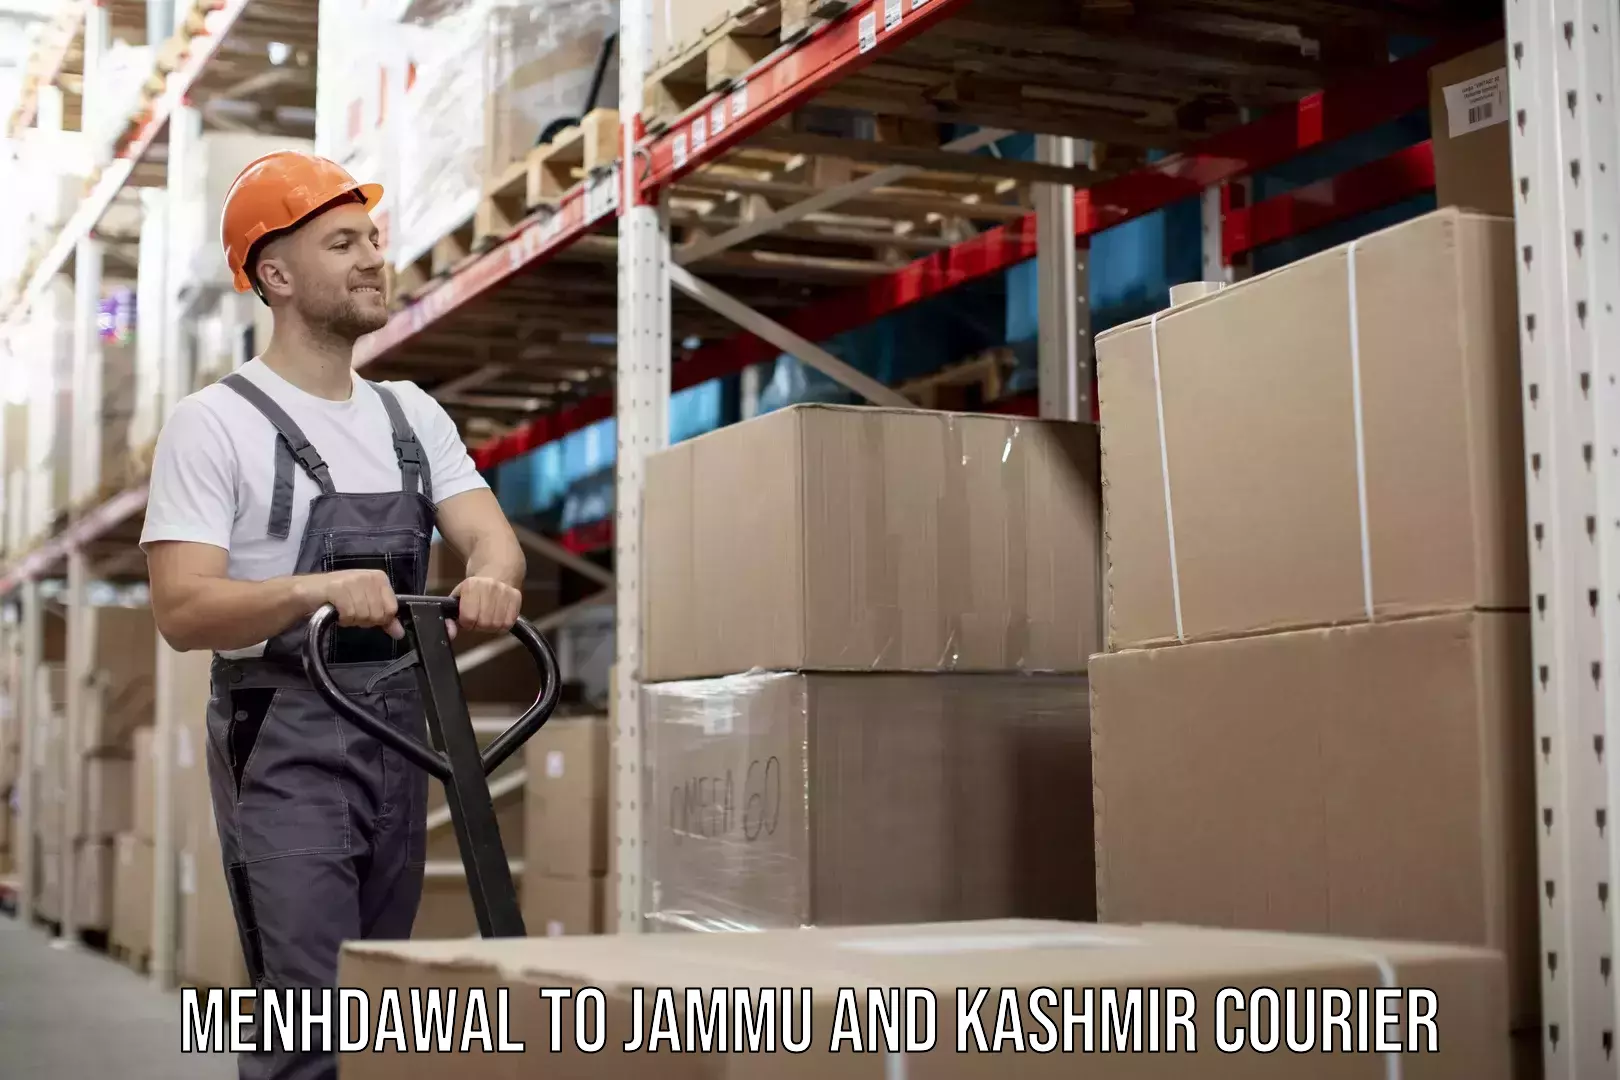 Furniture moving experts Menhdawal to Jammu and Kashmir